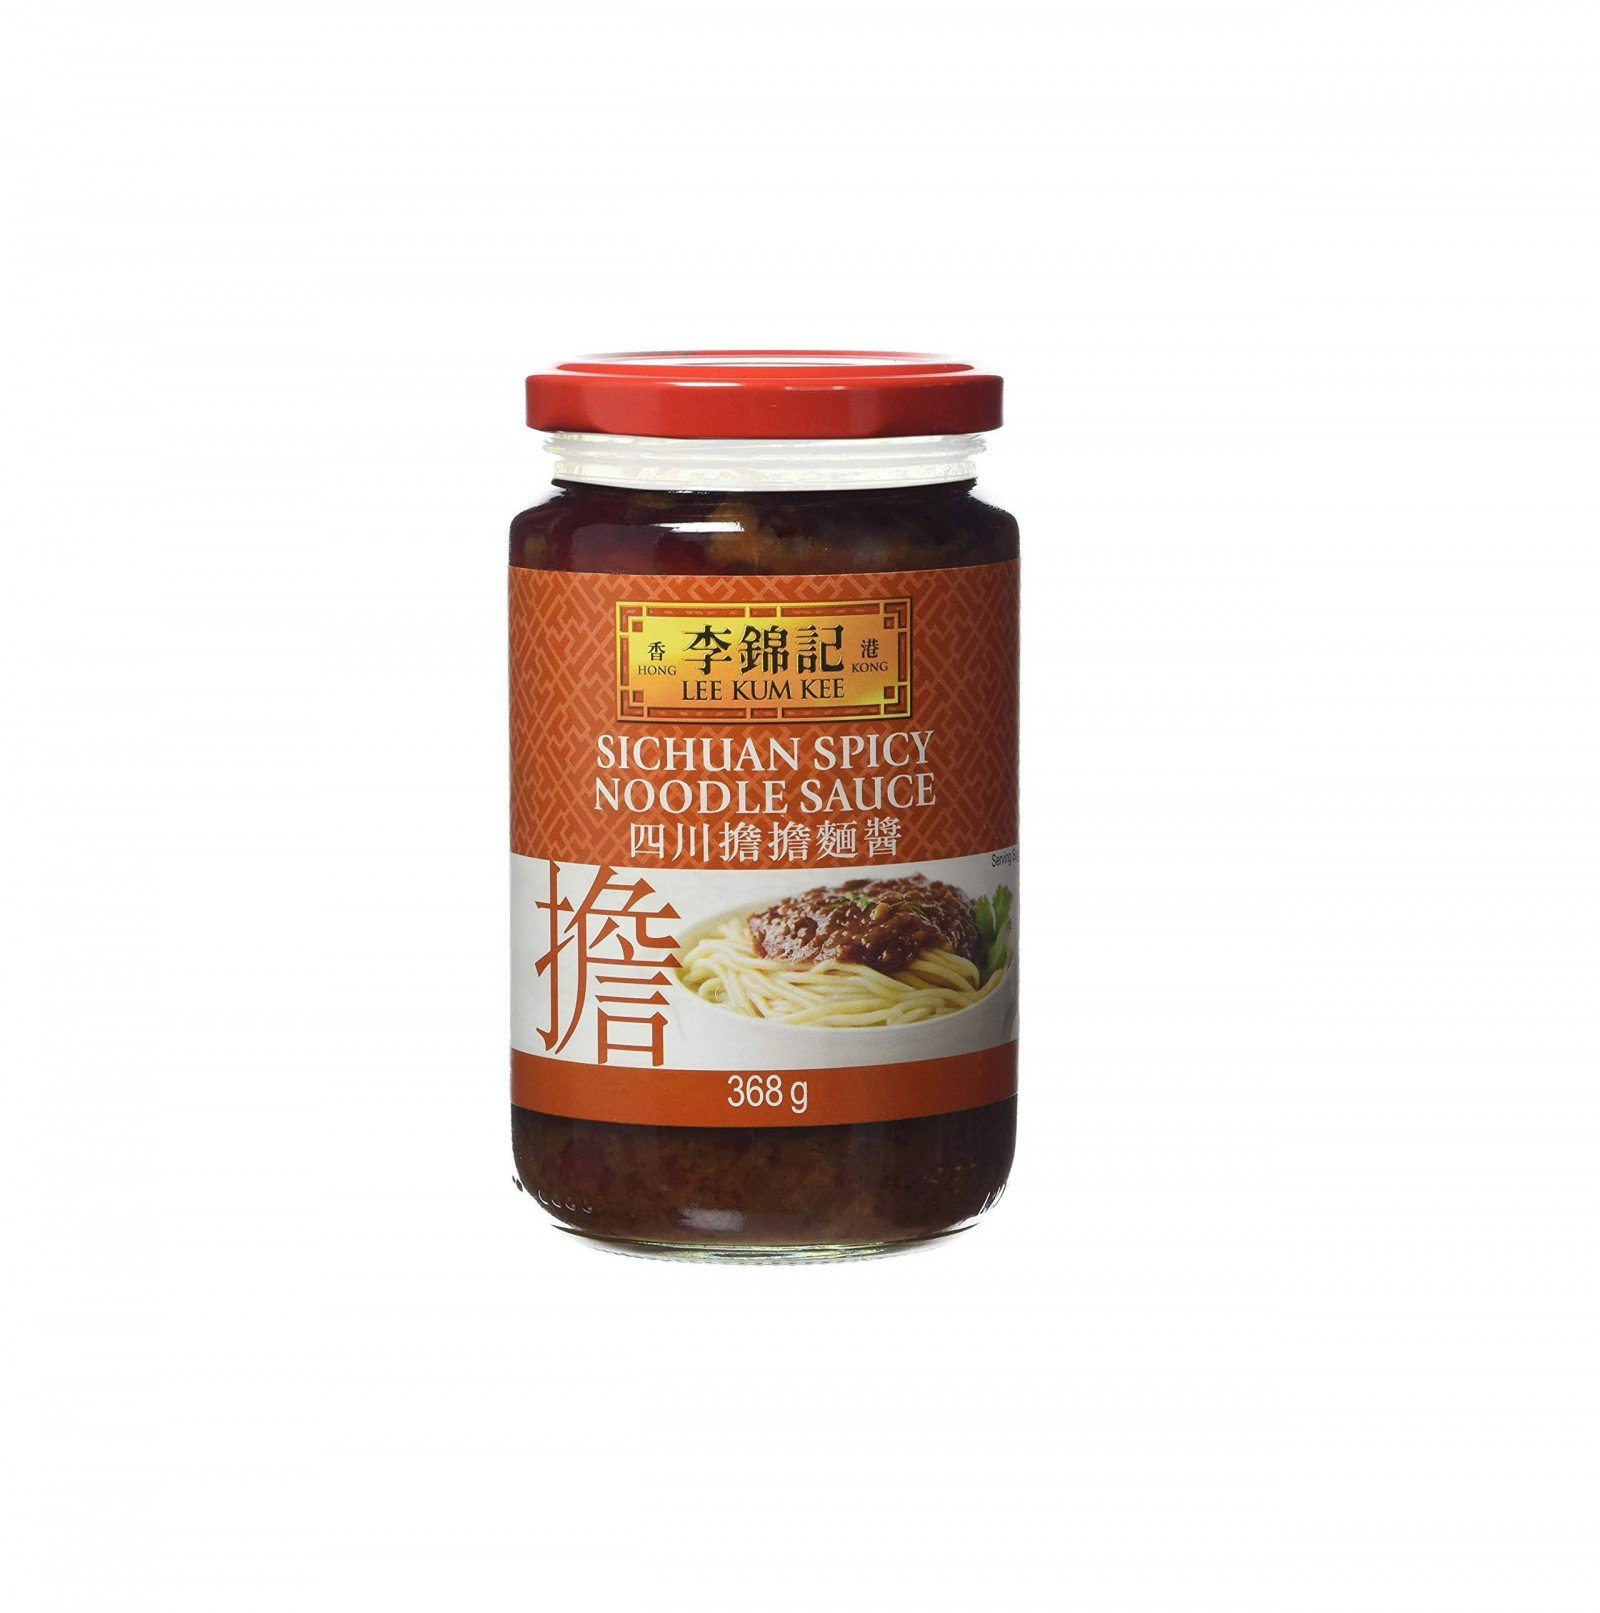 Lee Kum Kee Sichuan Spicy Noodle Sauce 368g